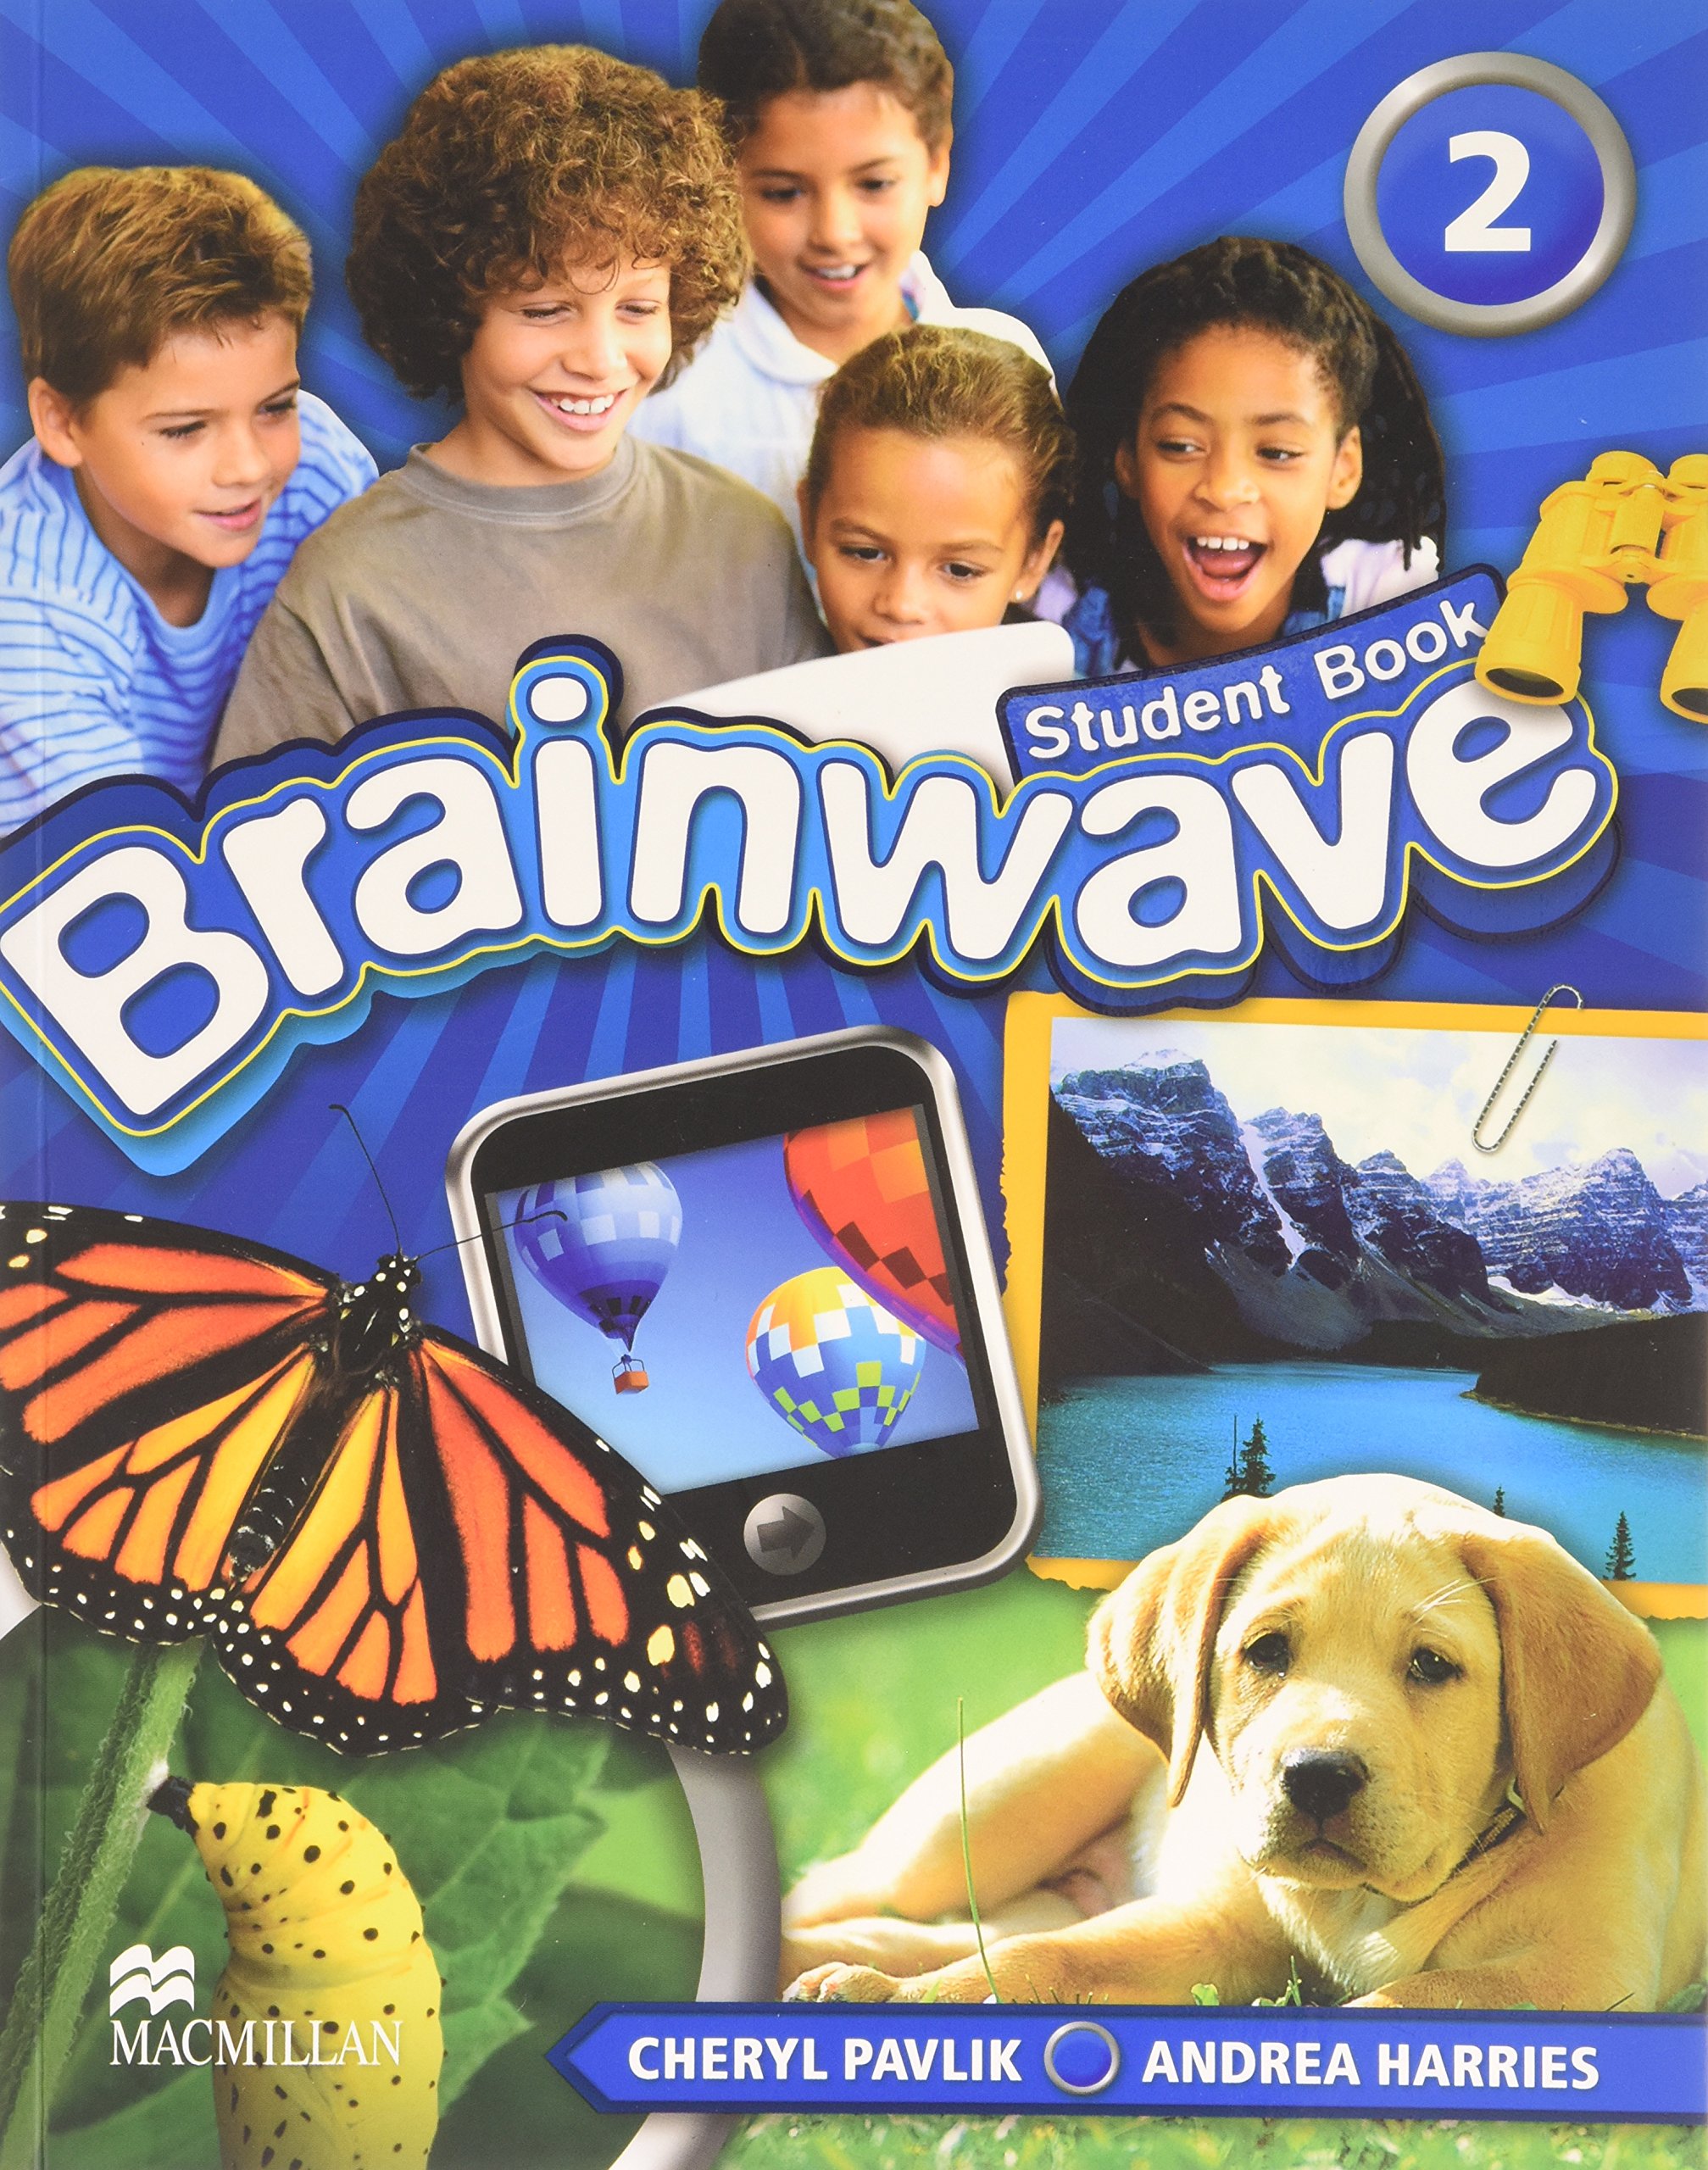 Vezi detalii pentru Brainwave 2 - Student Book | Cheryl Pavlik, Andrea Harries